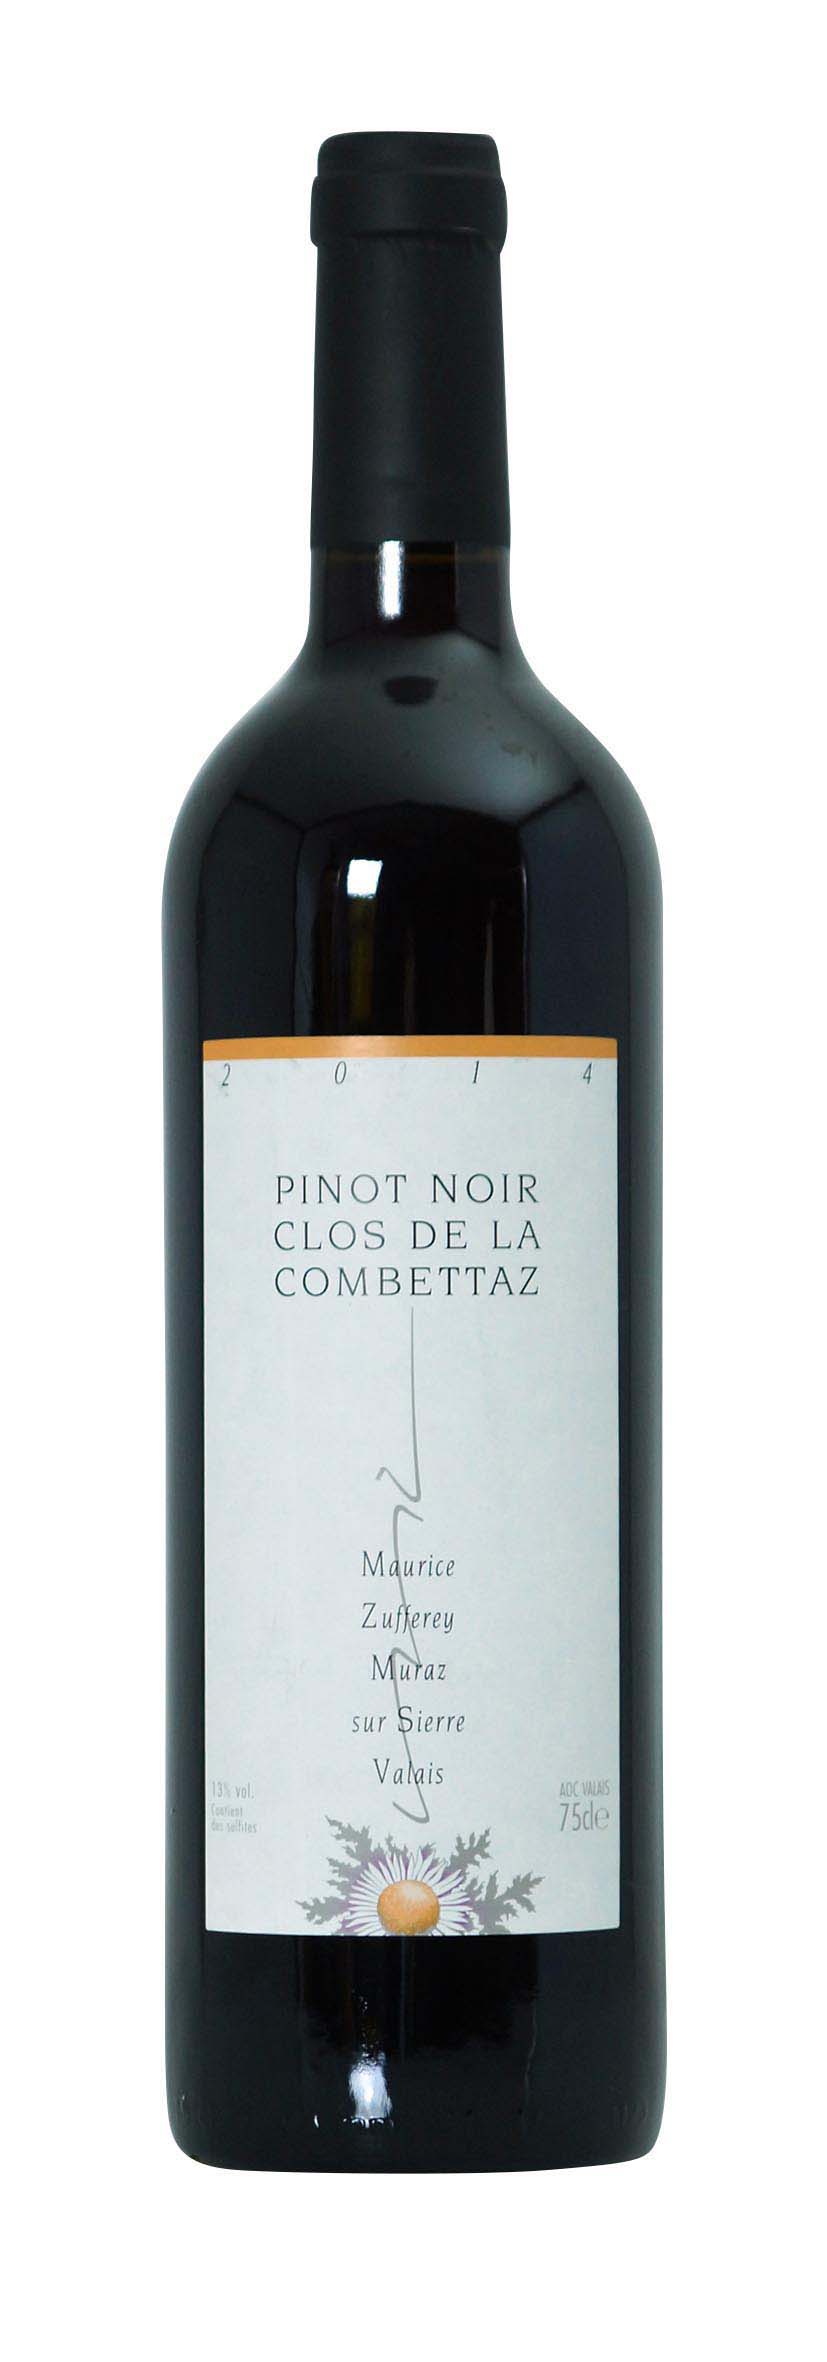 Valais AOC Pinot Noir Clos de la Combettaz 2014